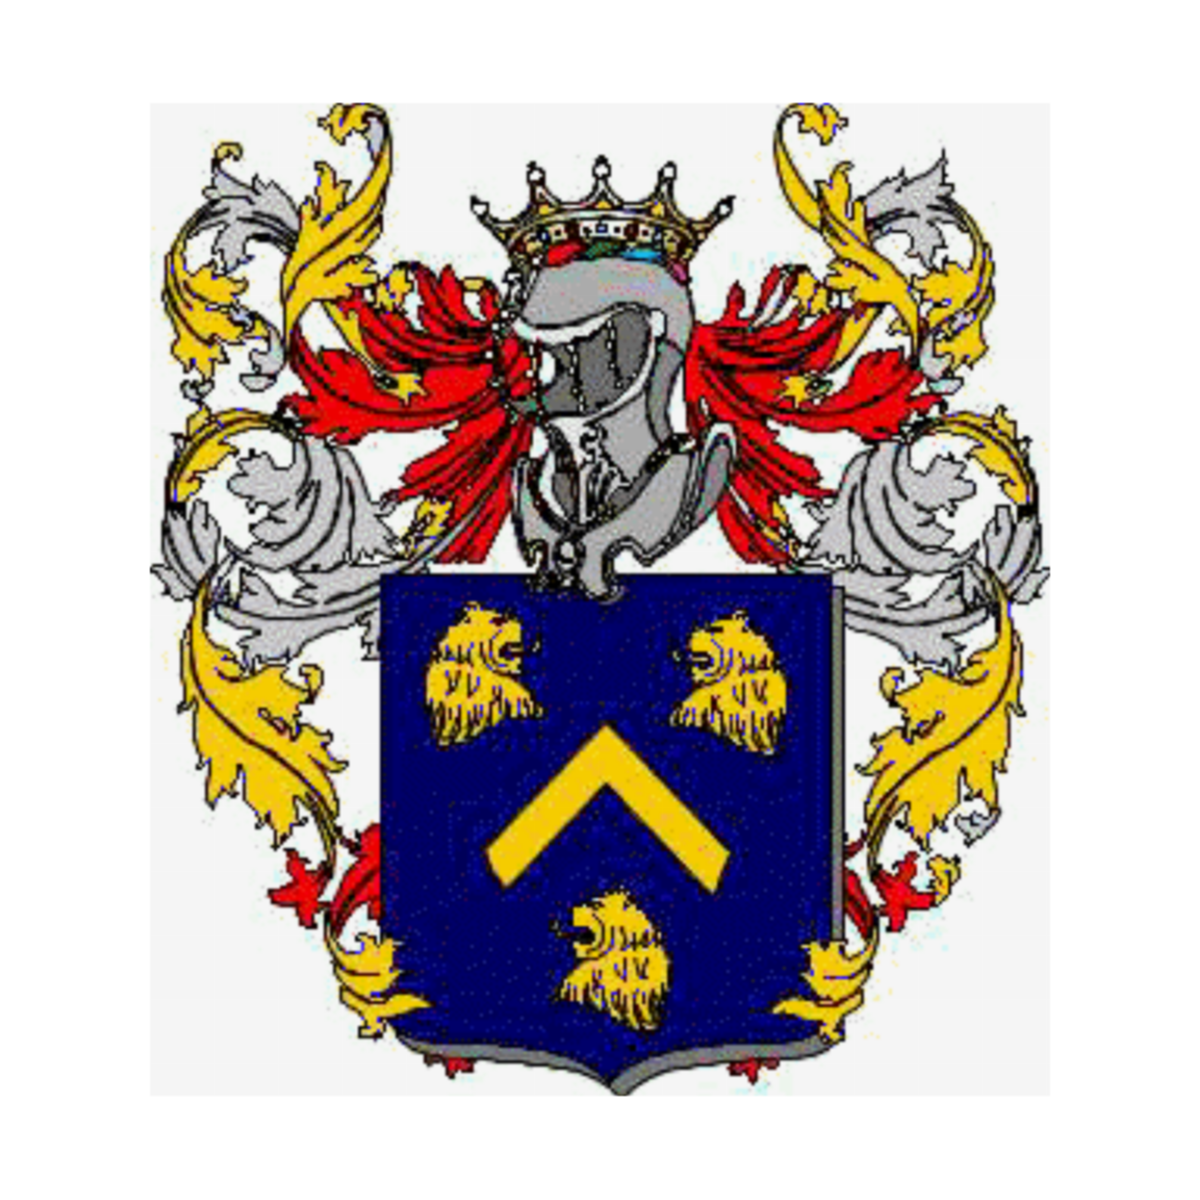 Wappen der Familie Della Manna